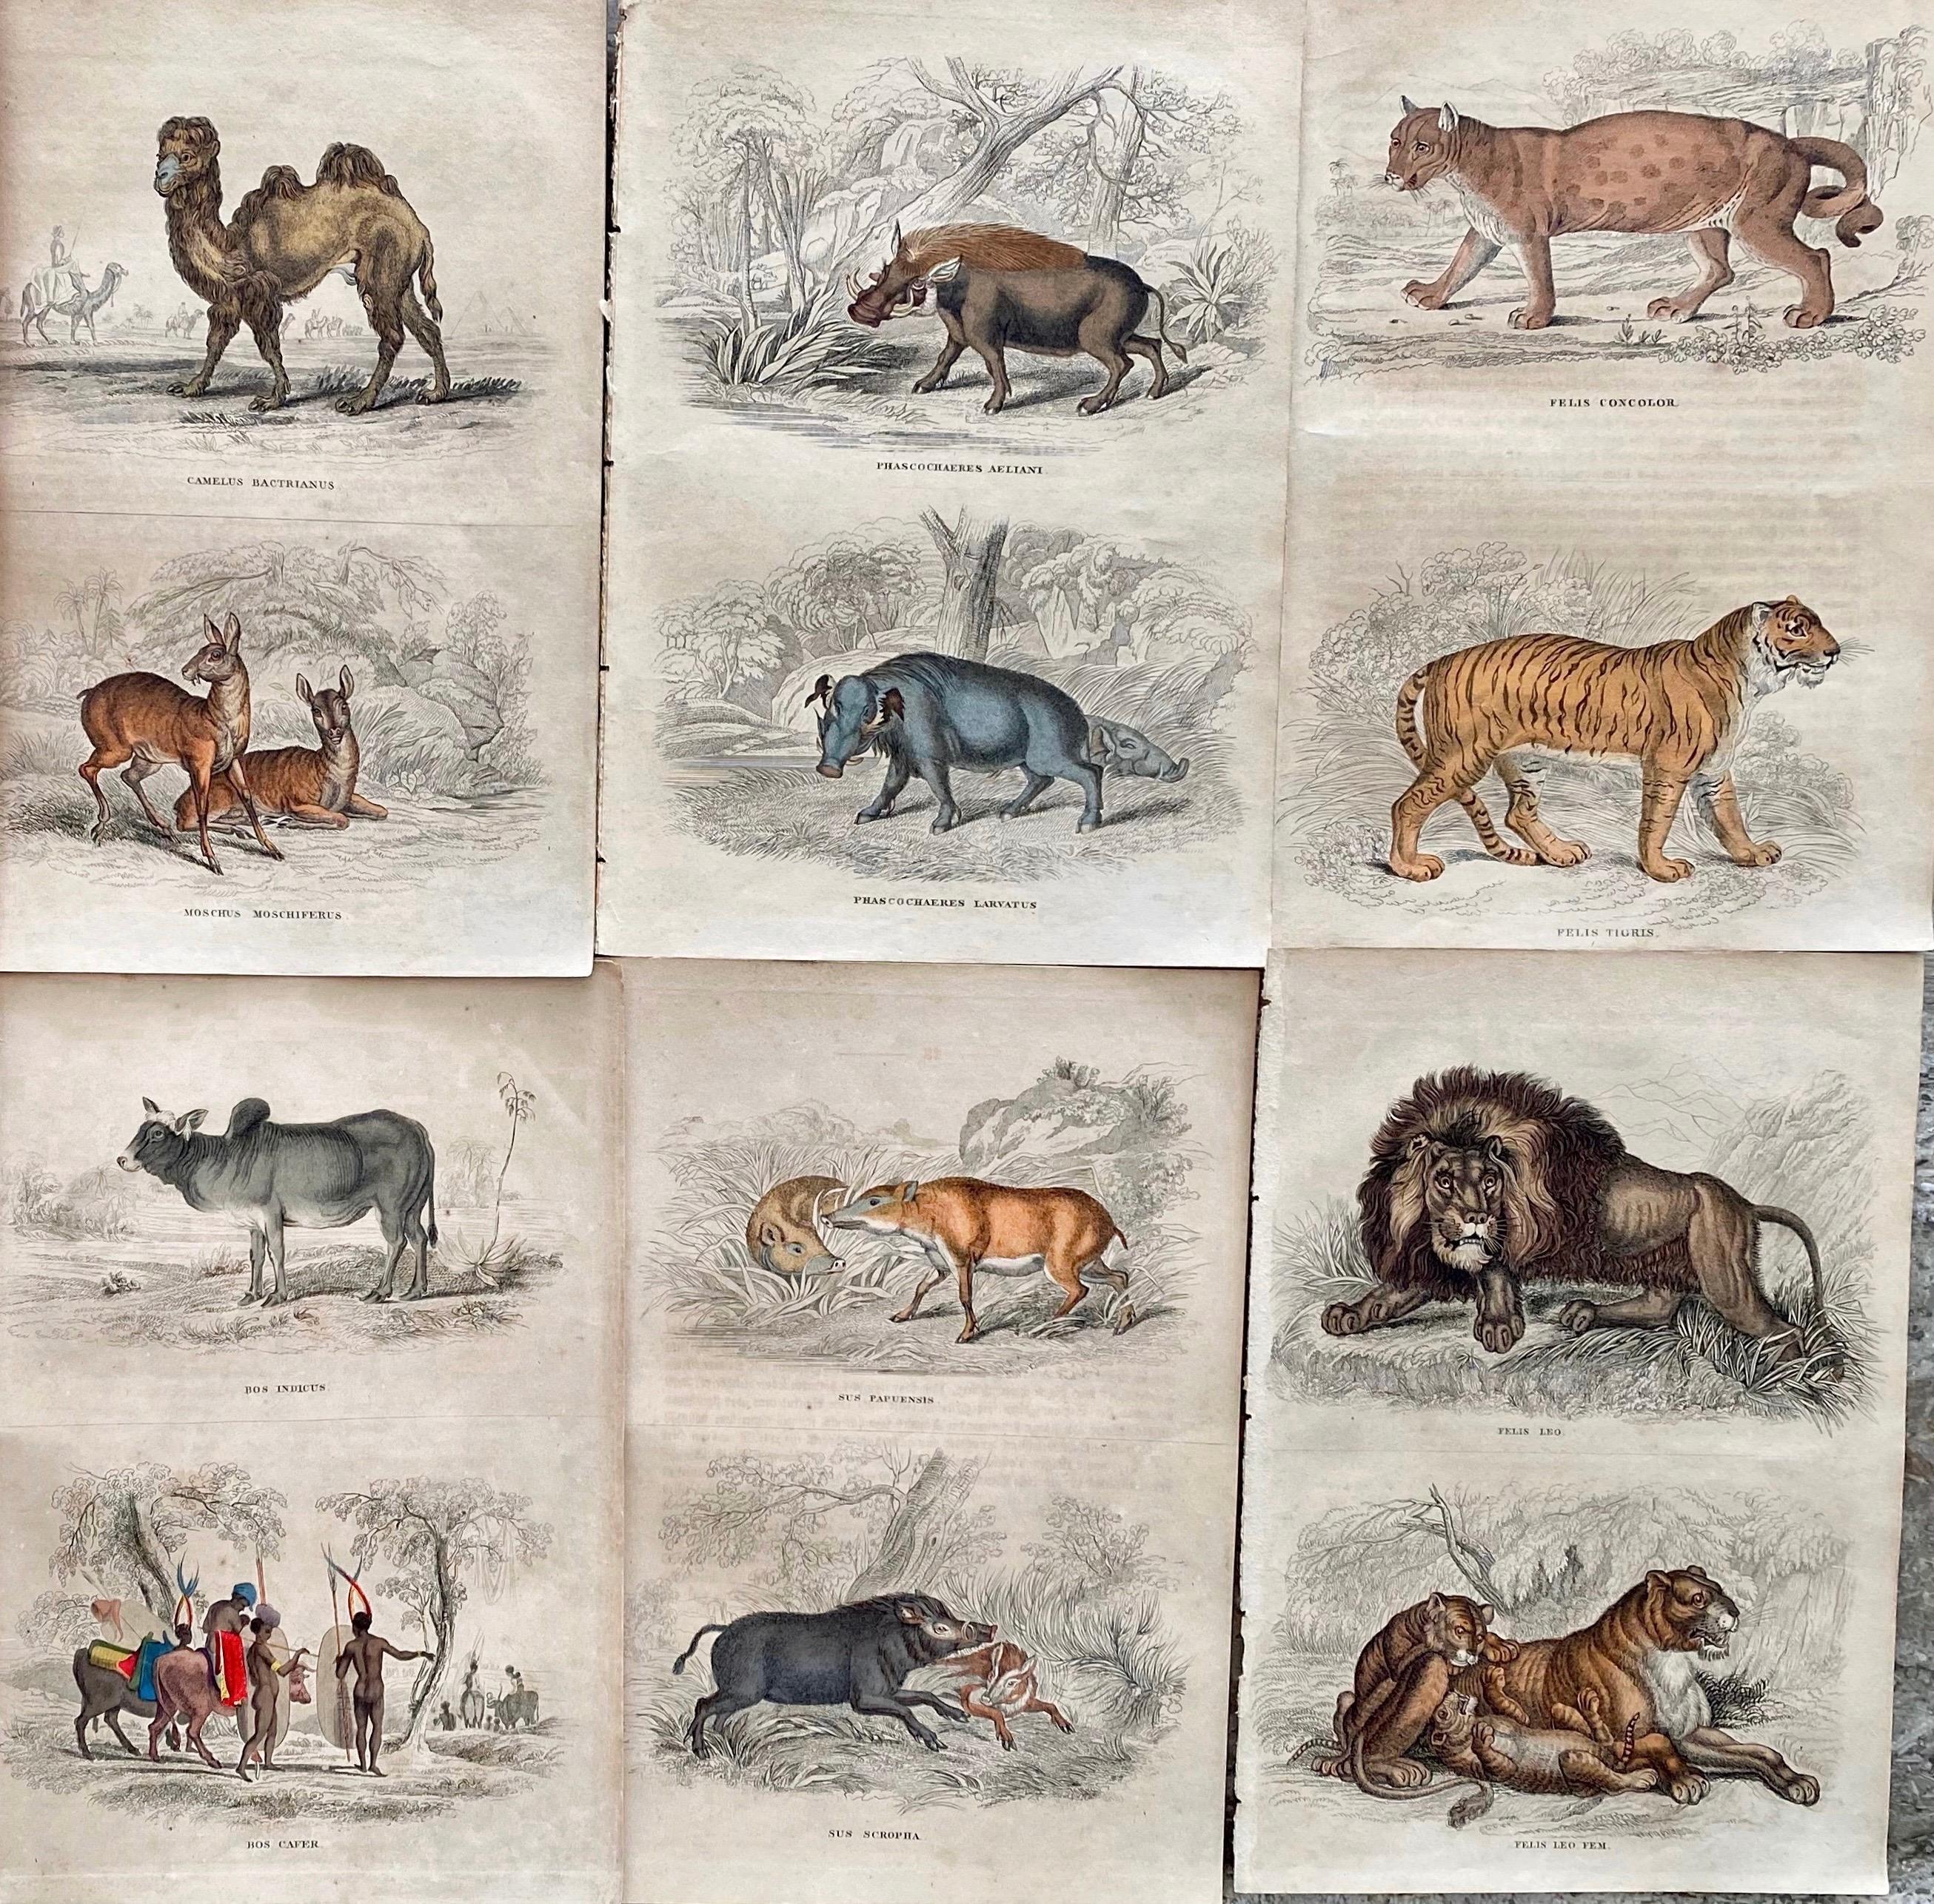 Sir William Jardine, 7th Baronet (after) Landscape Print - Exotic Animals Antique Hand Coloured Print - Africa Lion Camel Tiger